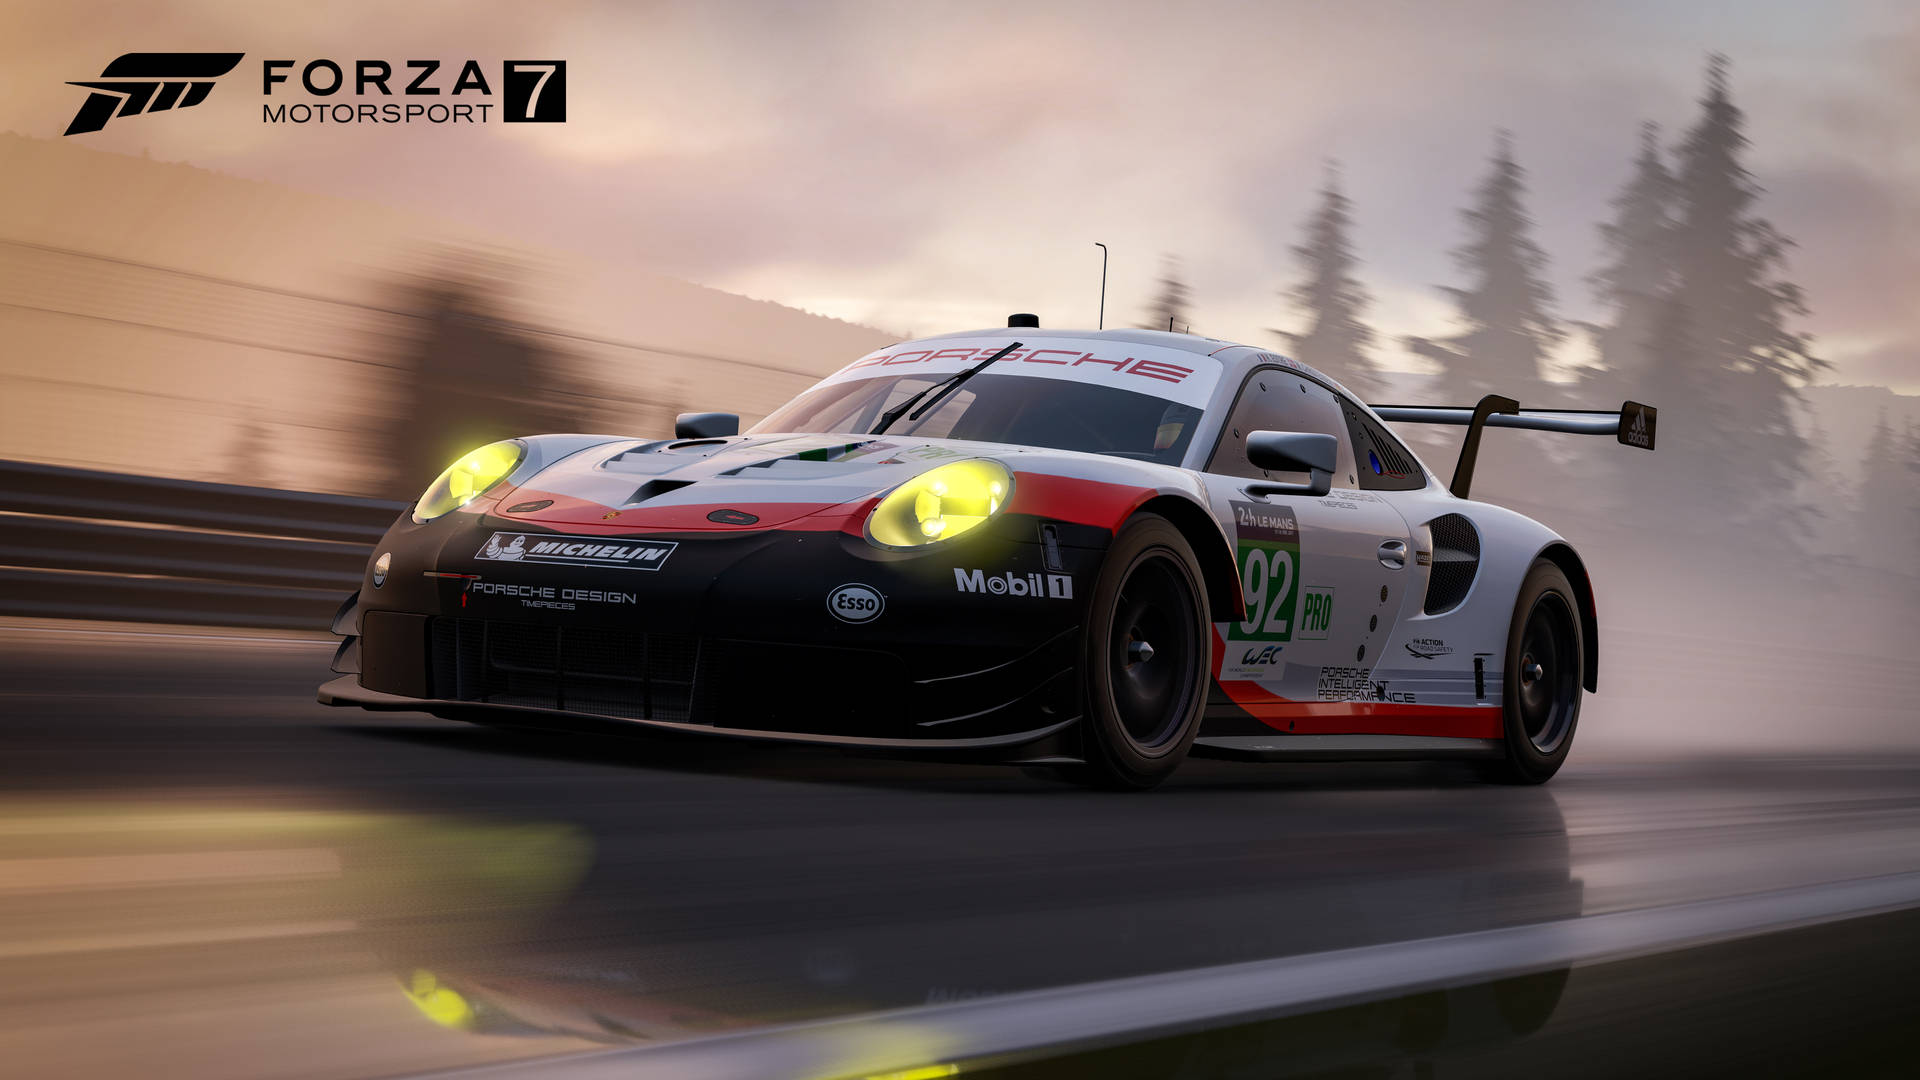 Download free Forza Motorsport 7